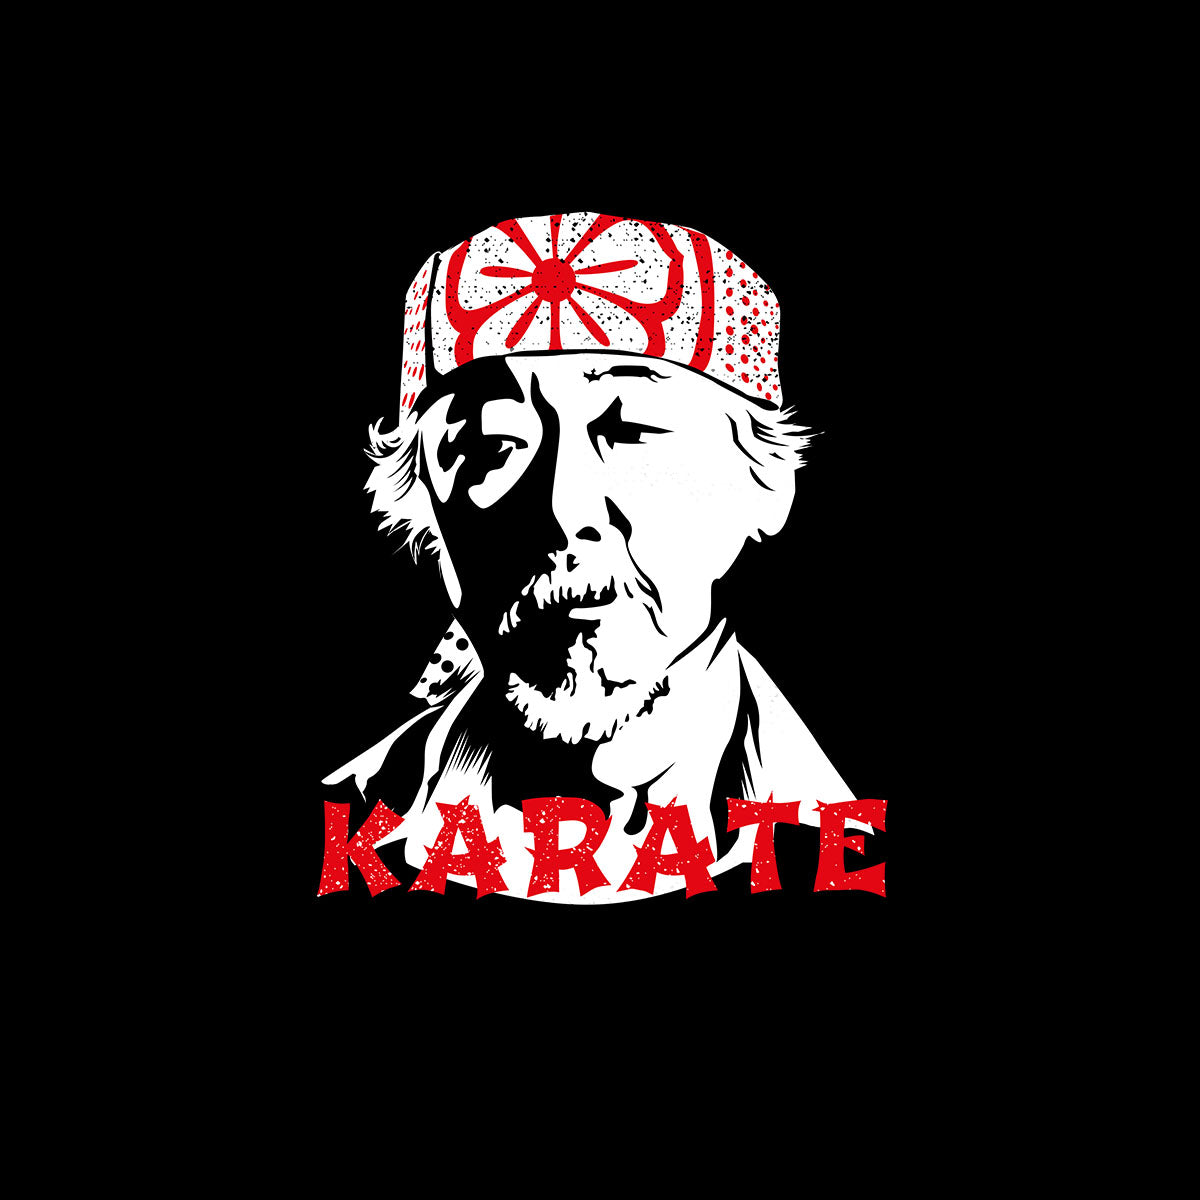 Mr Miyagi Karate Kid 80s Cult Movie Baby & Toddler Body Suit - Kuzi Tees